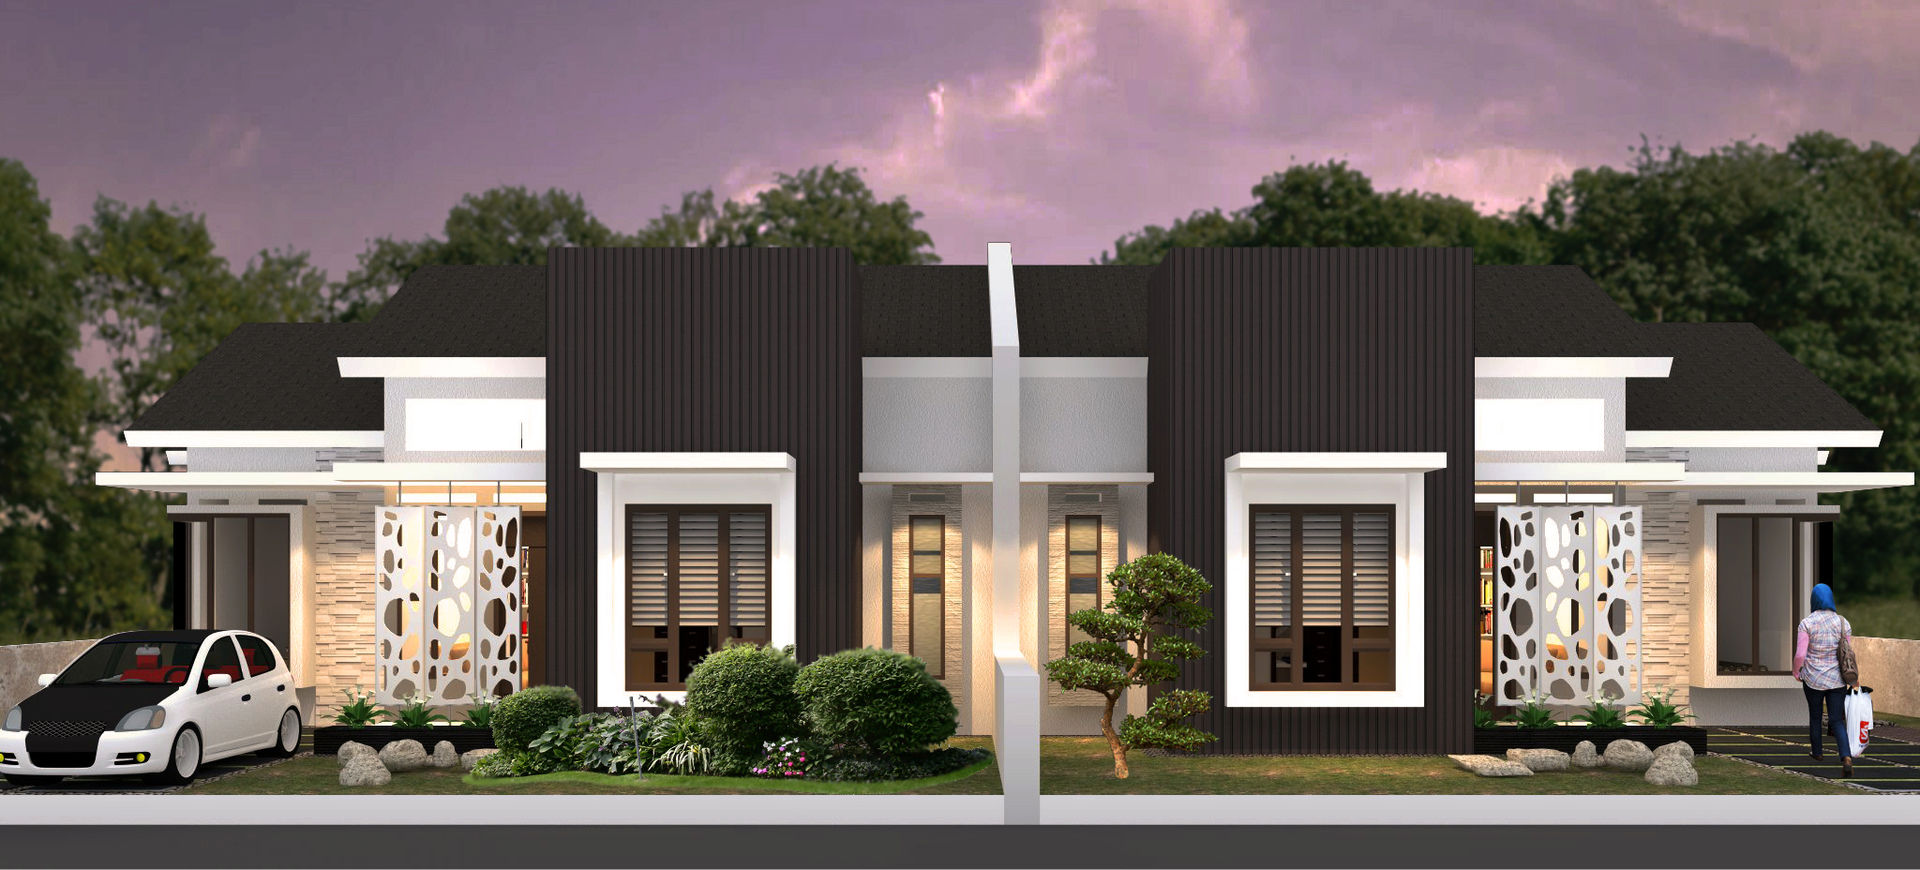 Artomoro residences Axis&M Architects Rumah Modern Batu Bata modren,residences,tropicalhouse